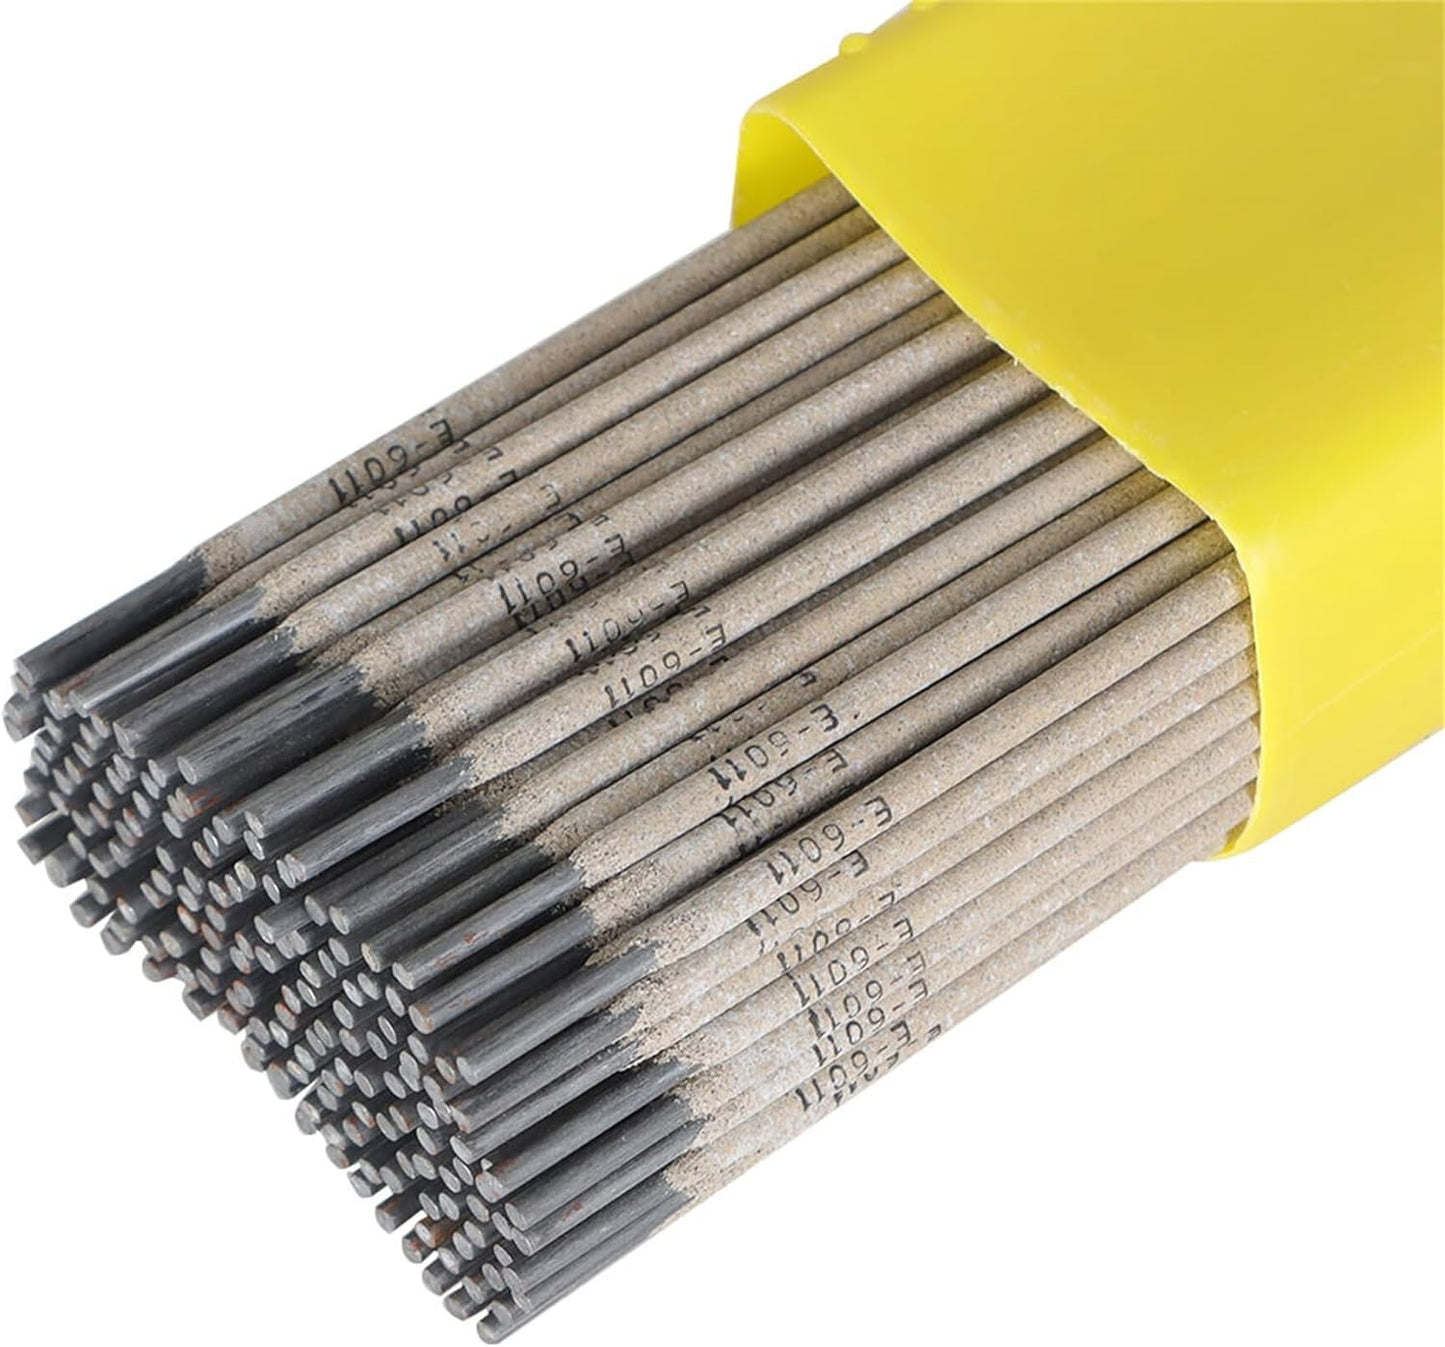 6 Packs of 10 Lbs E6011 1/8 Inch Carbon Steel Electrode Arc Welding Rods Welding Electrode